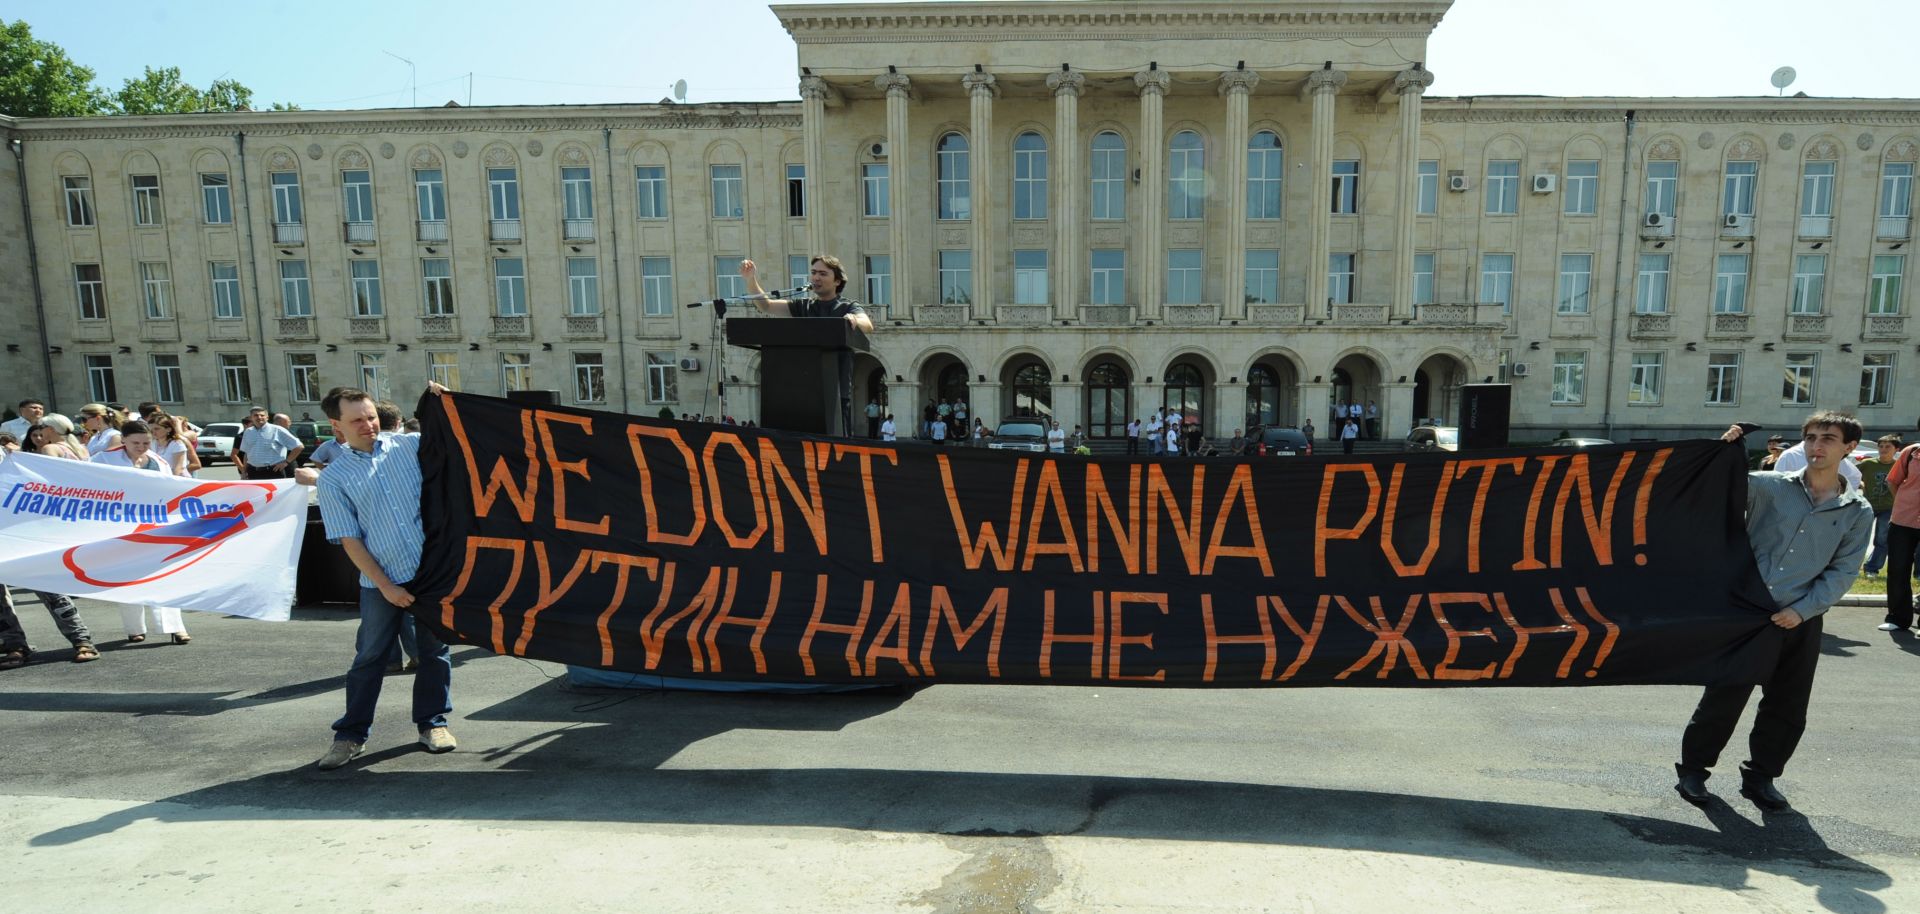 A Russian opposition activist gives a speech behind a large banner.